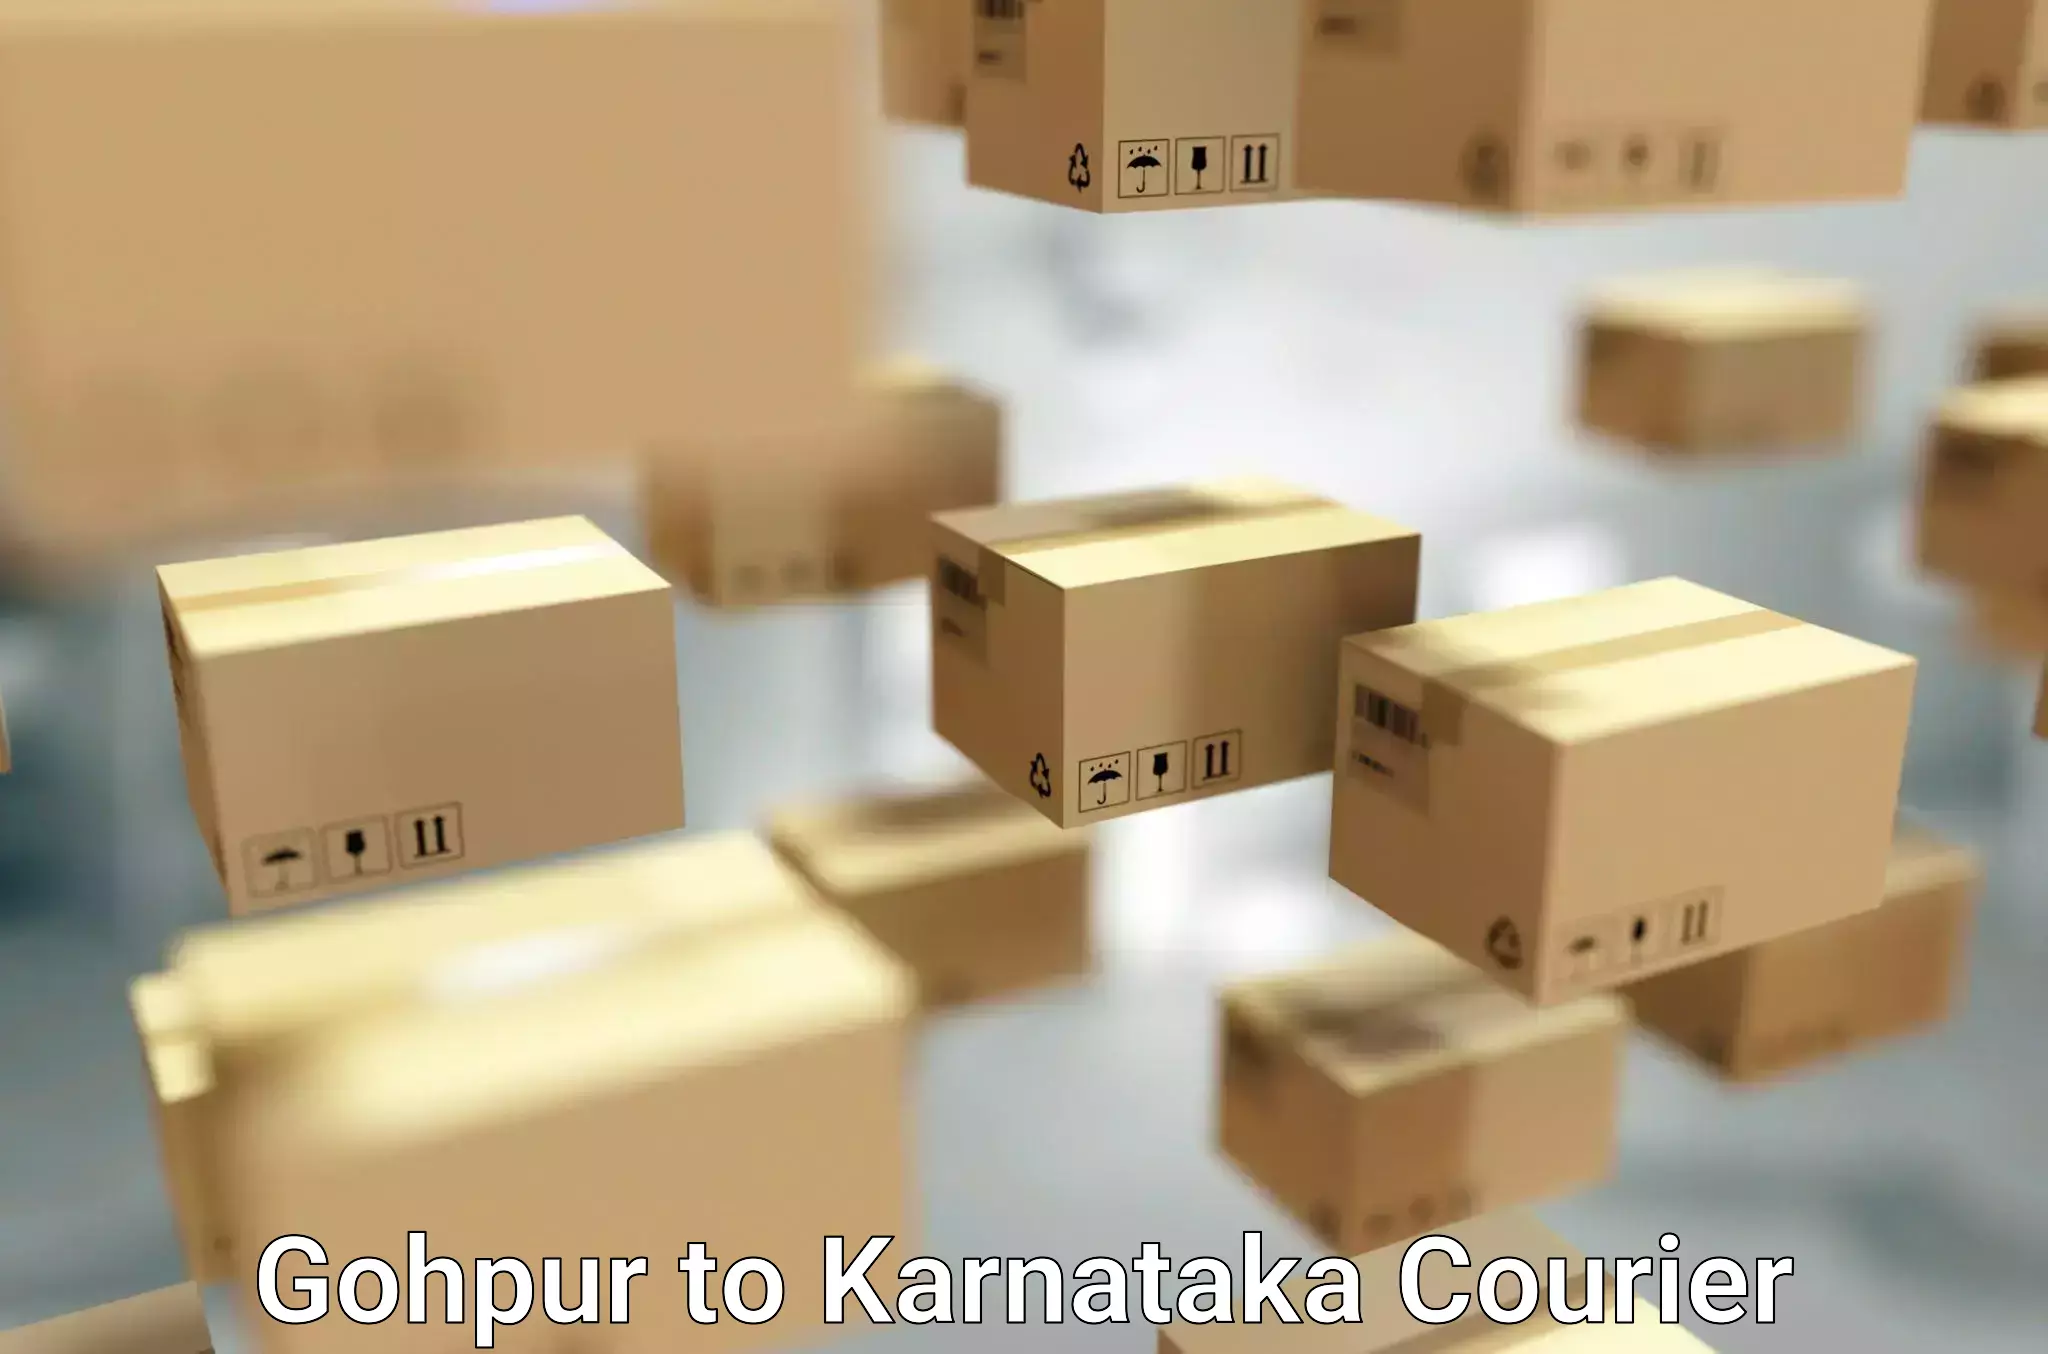 Trusted relocation experts Gohpur to Karnataka